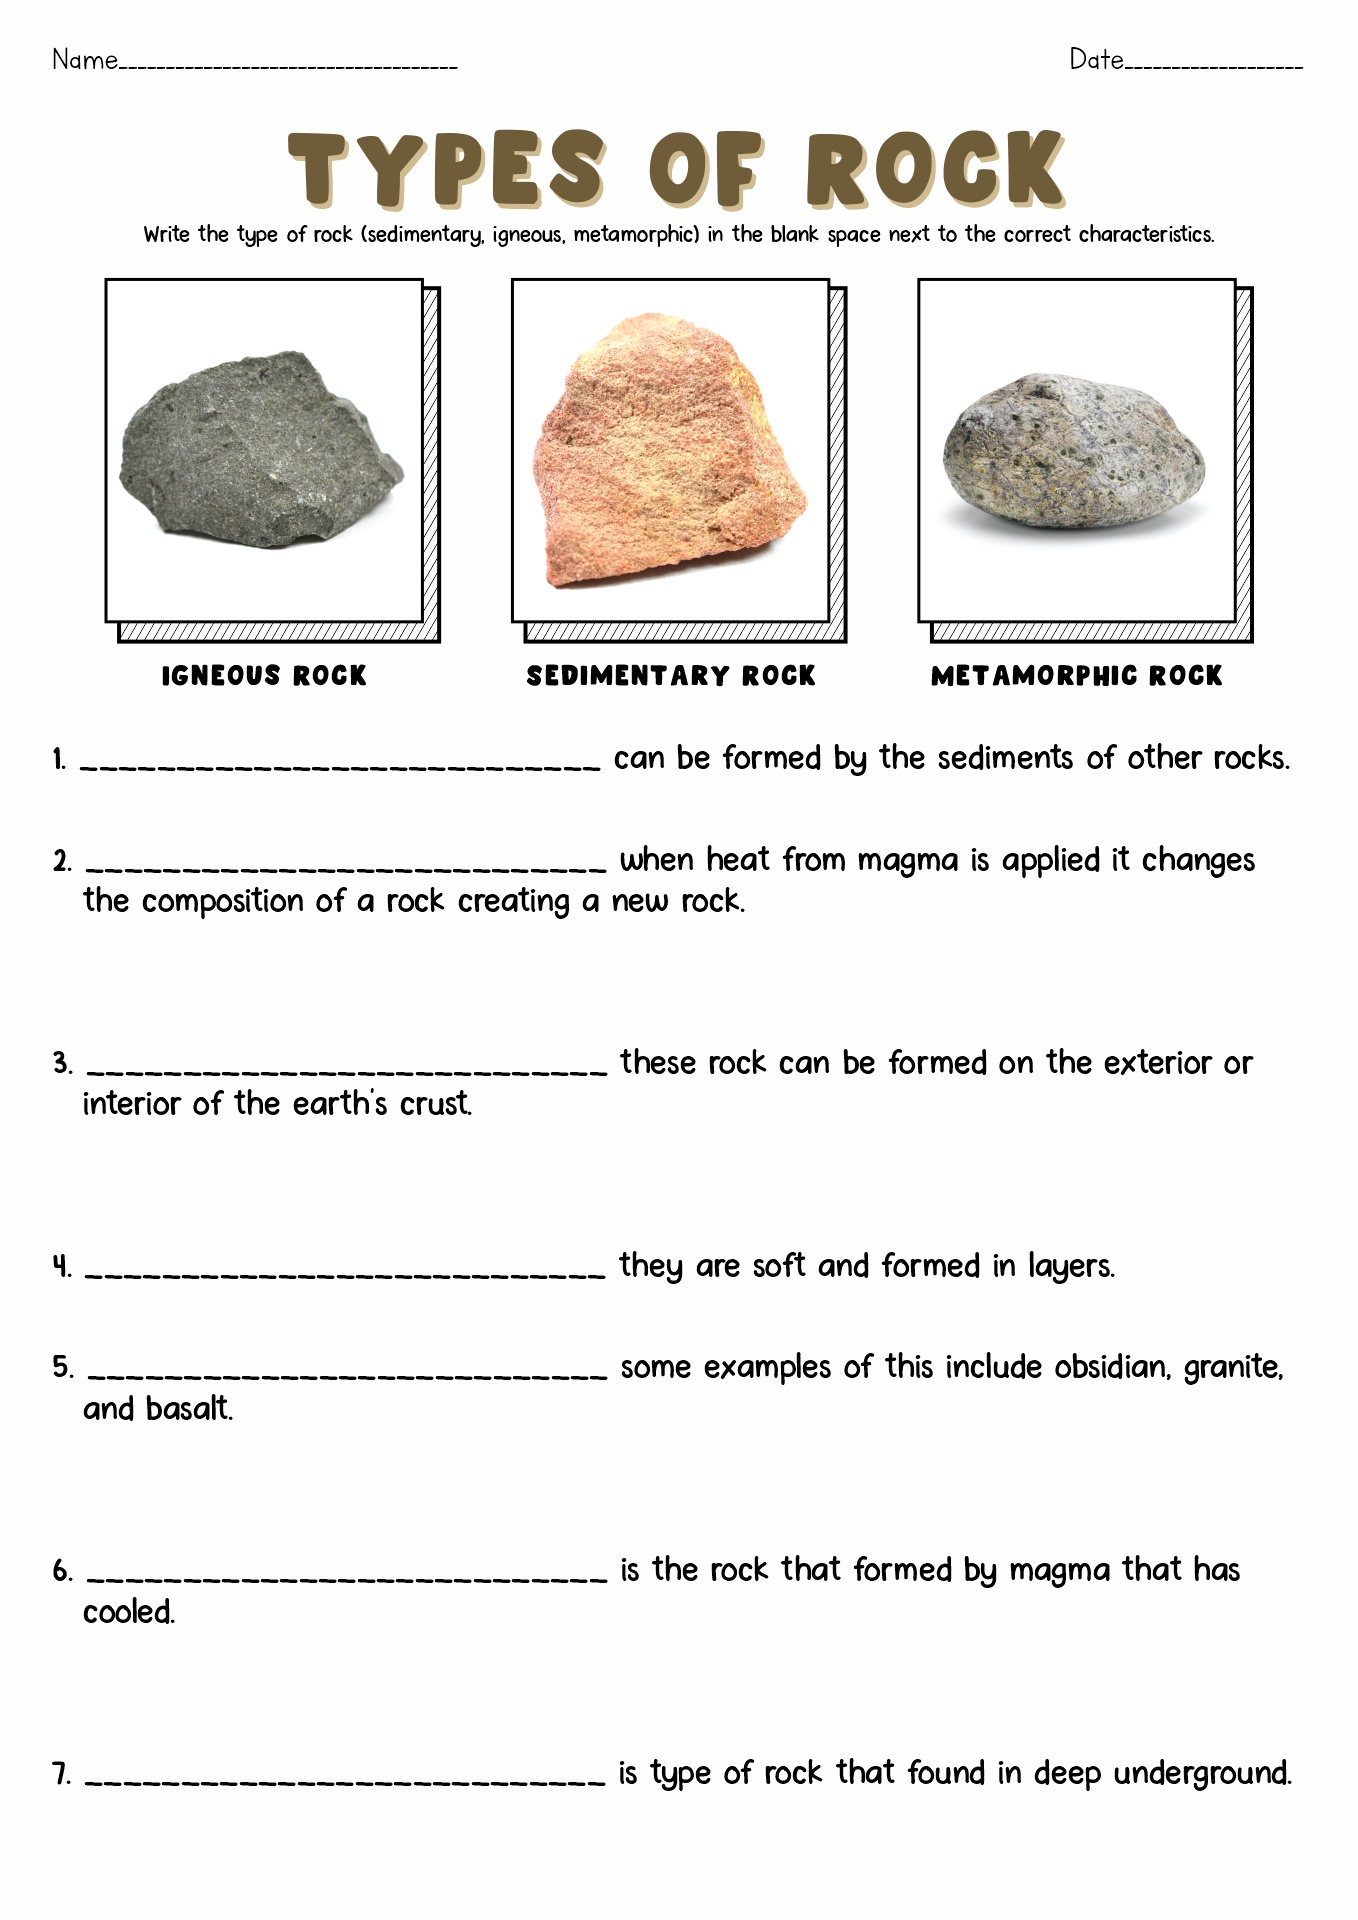 3 Types of Rocks Worksheet Image